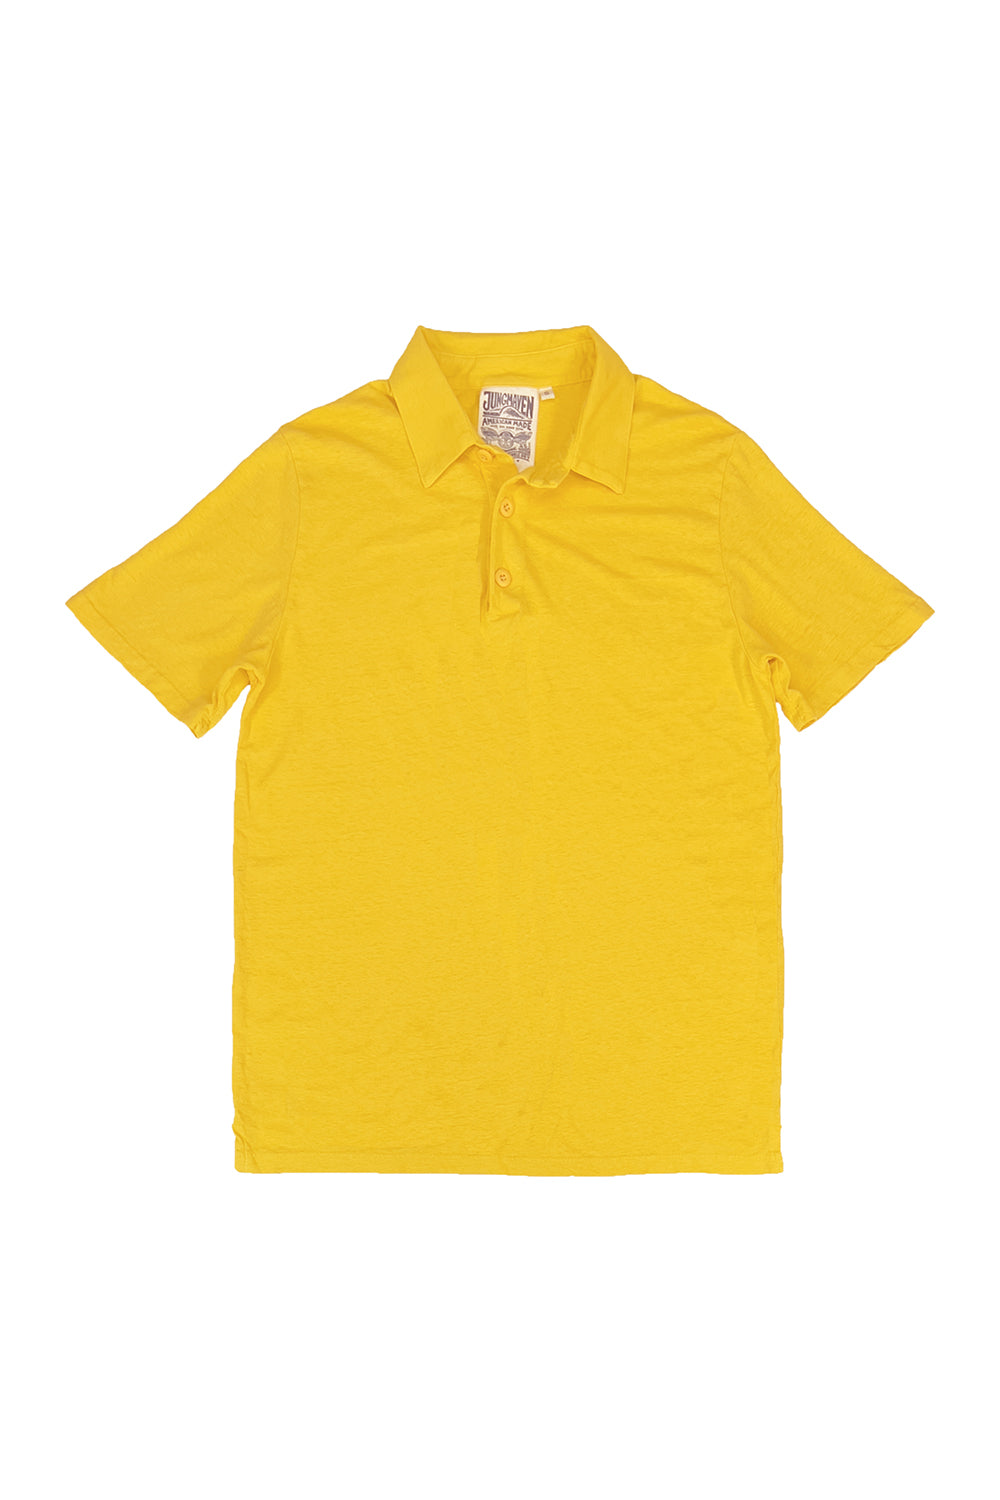 Camden Polo Shirt | Jungmaven Hemp Clothing & Accessories / Color: Sunshine Yellow